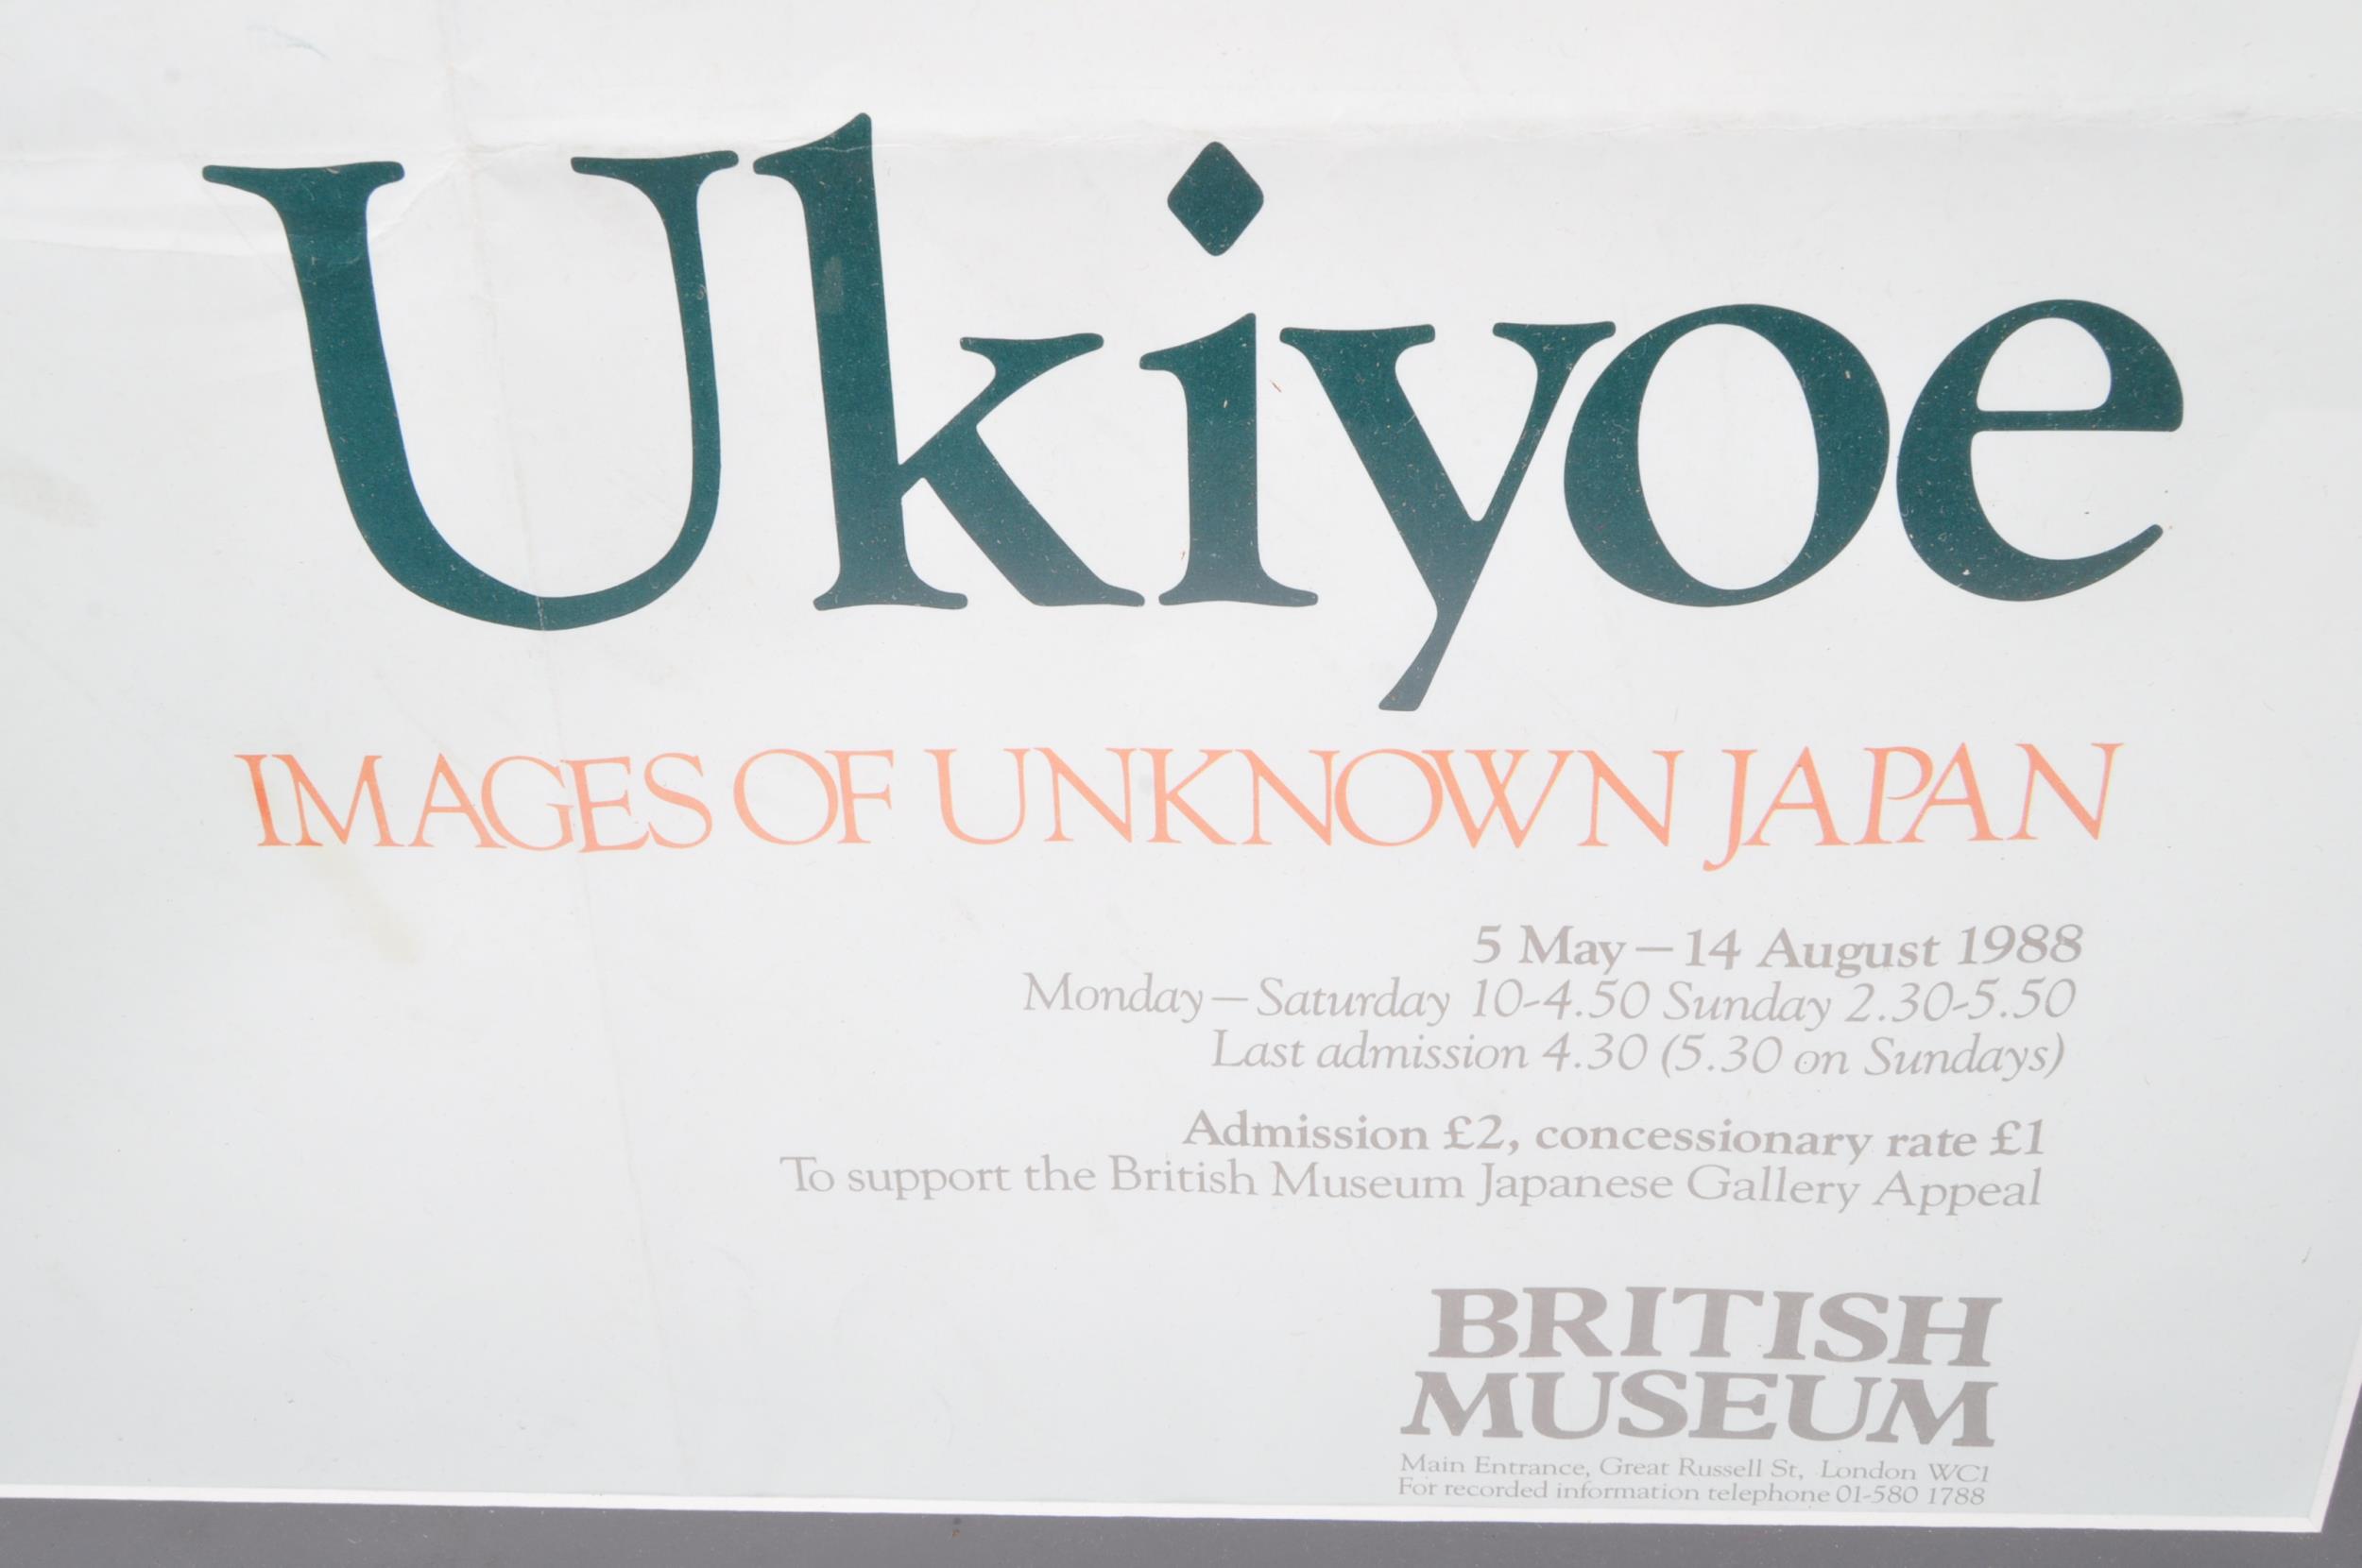 VINTAGE 1980S BRITISH MUSEUM UKIYOE EXHIBITION POSTER - Image 2 of 4